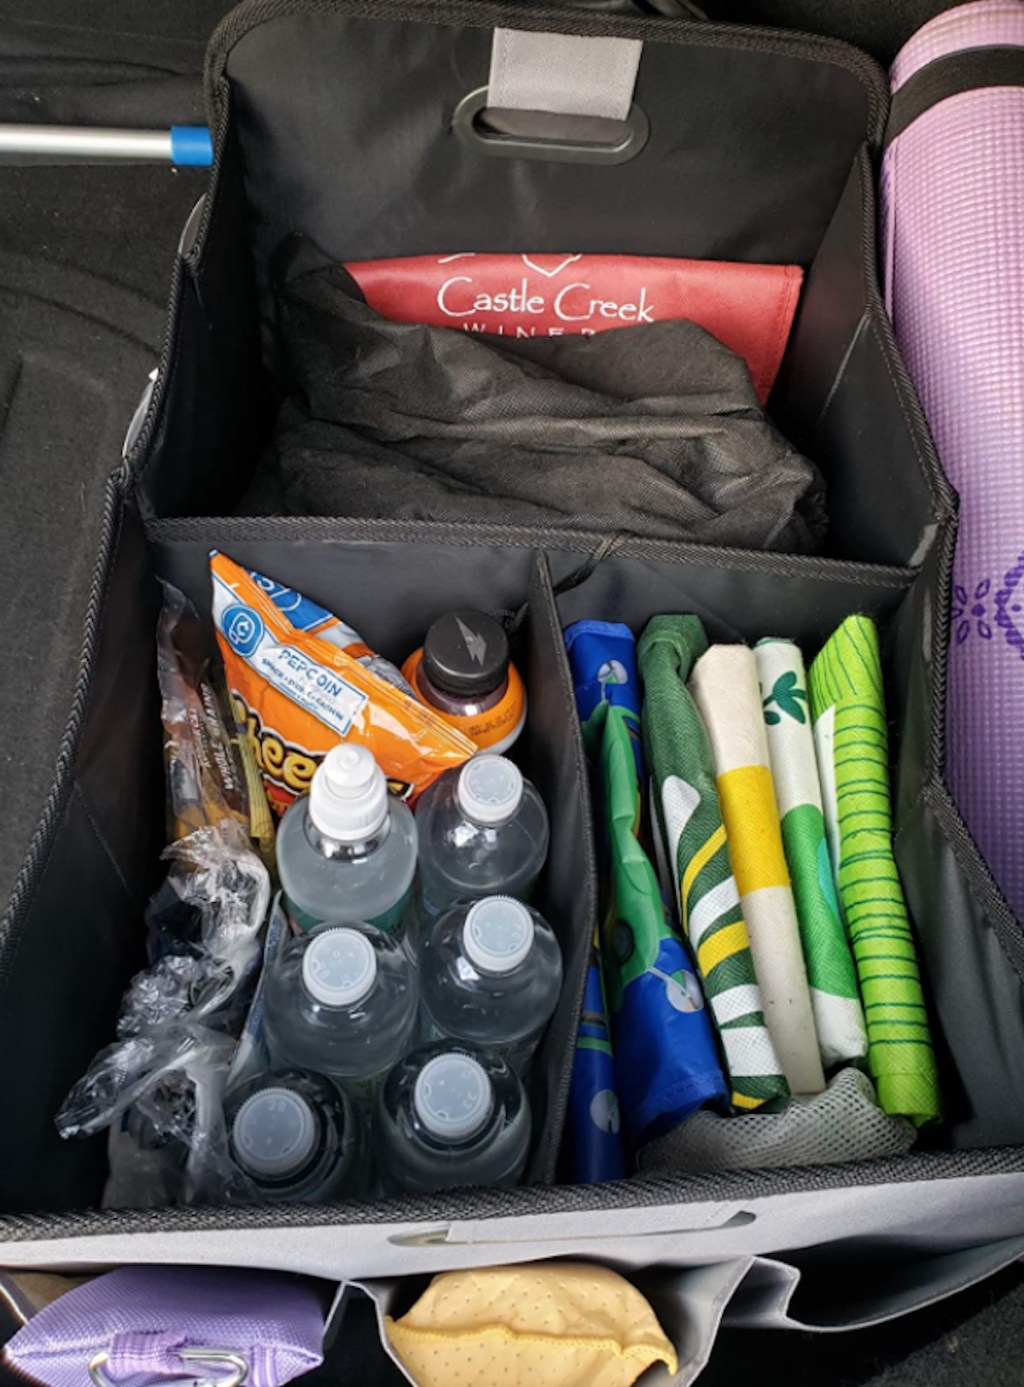 water bottles and reusable bags inside storage bin